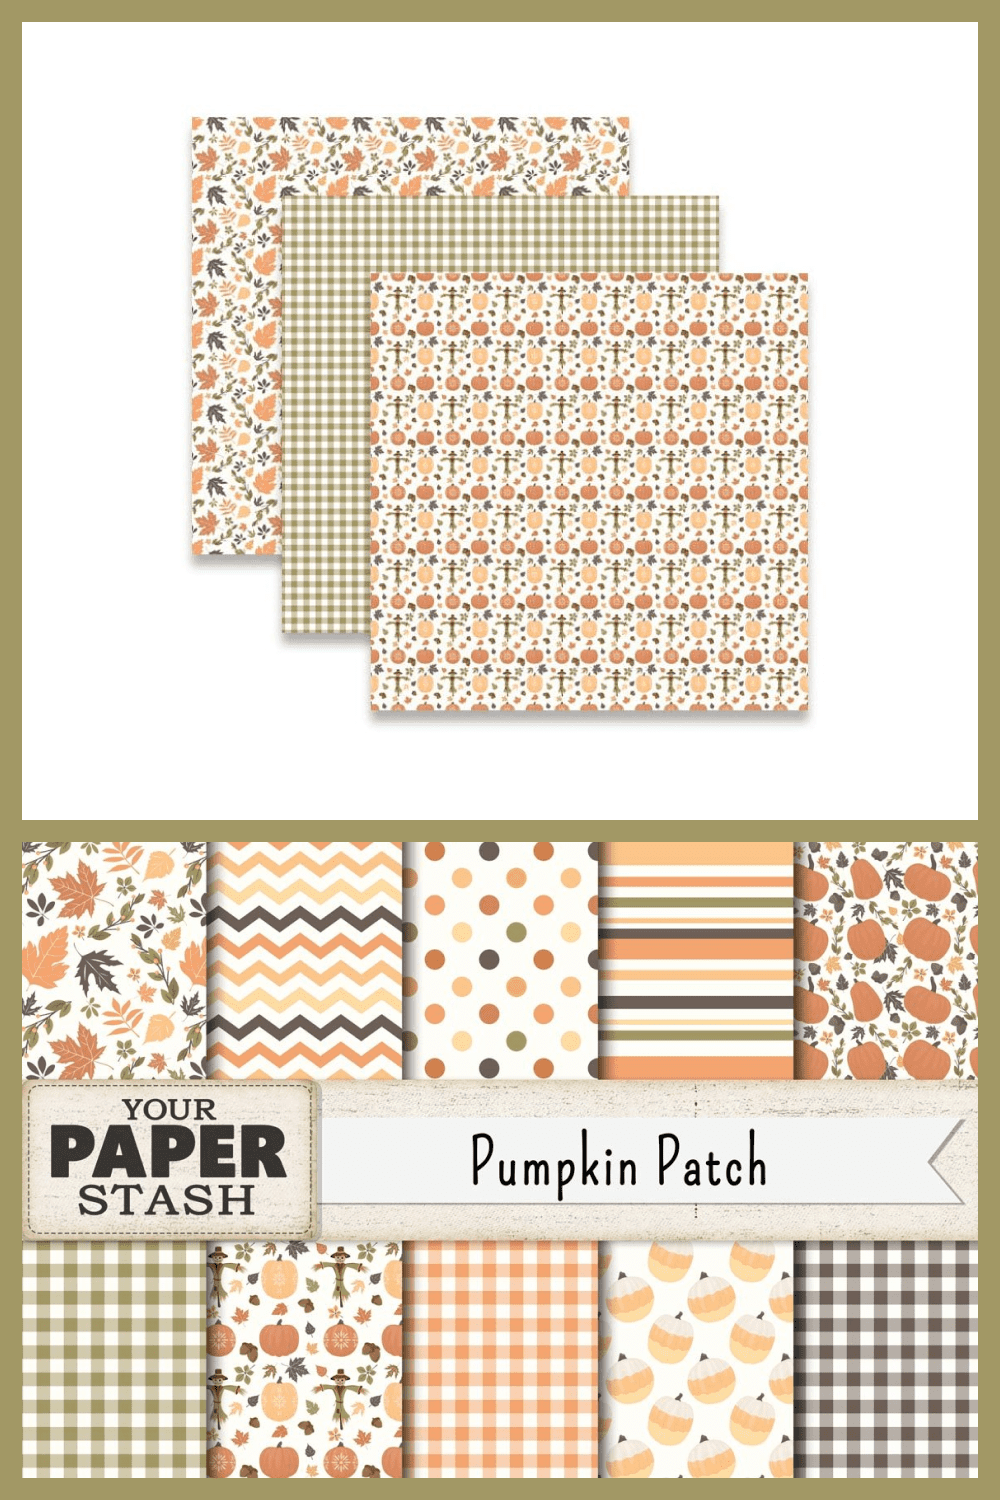 Pumpkin patch digital paper pack.